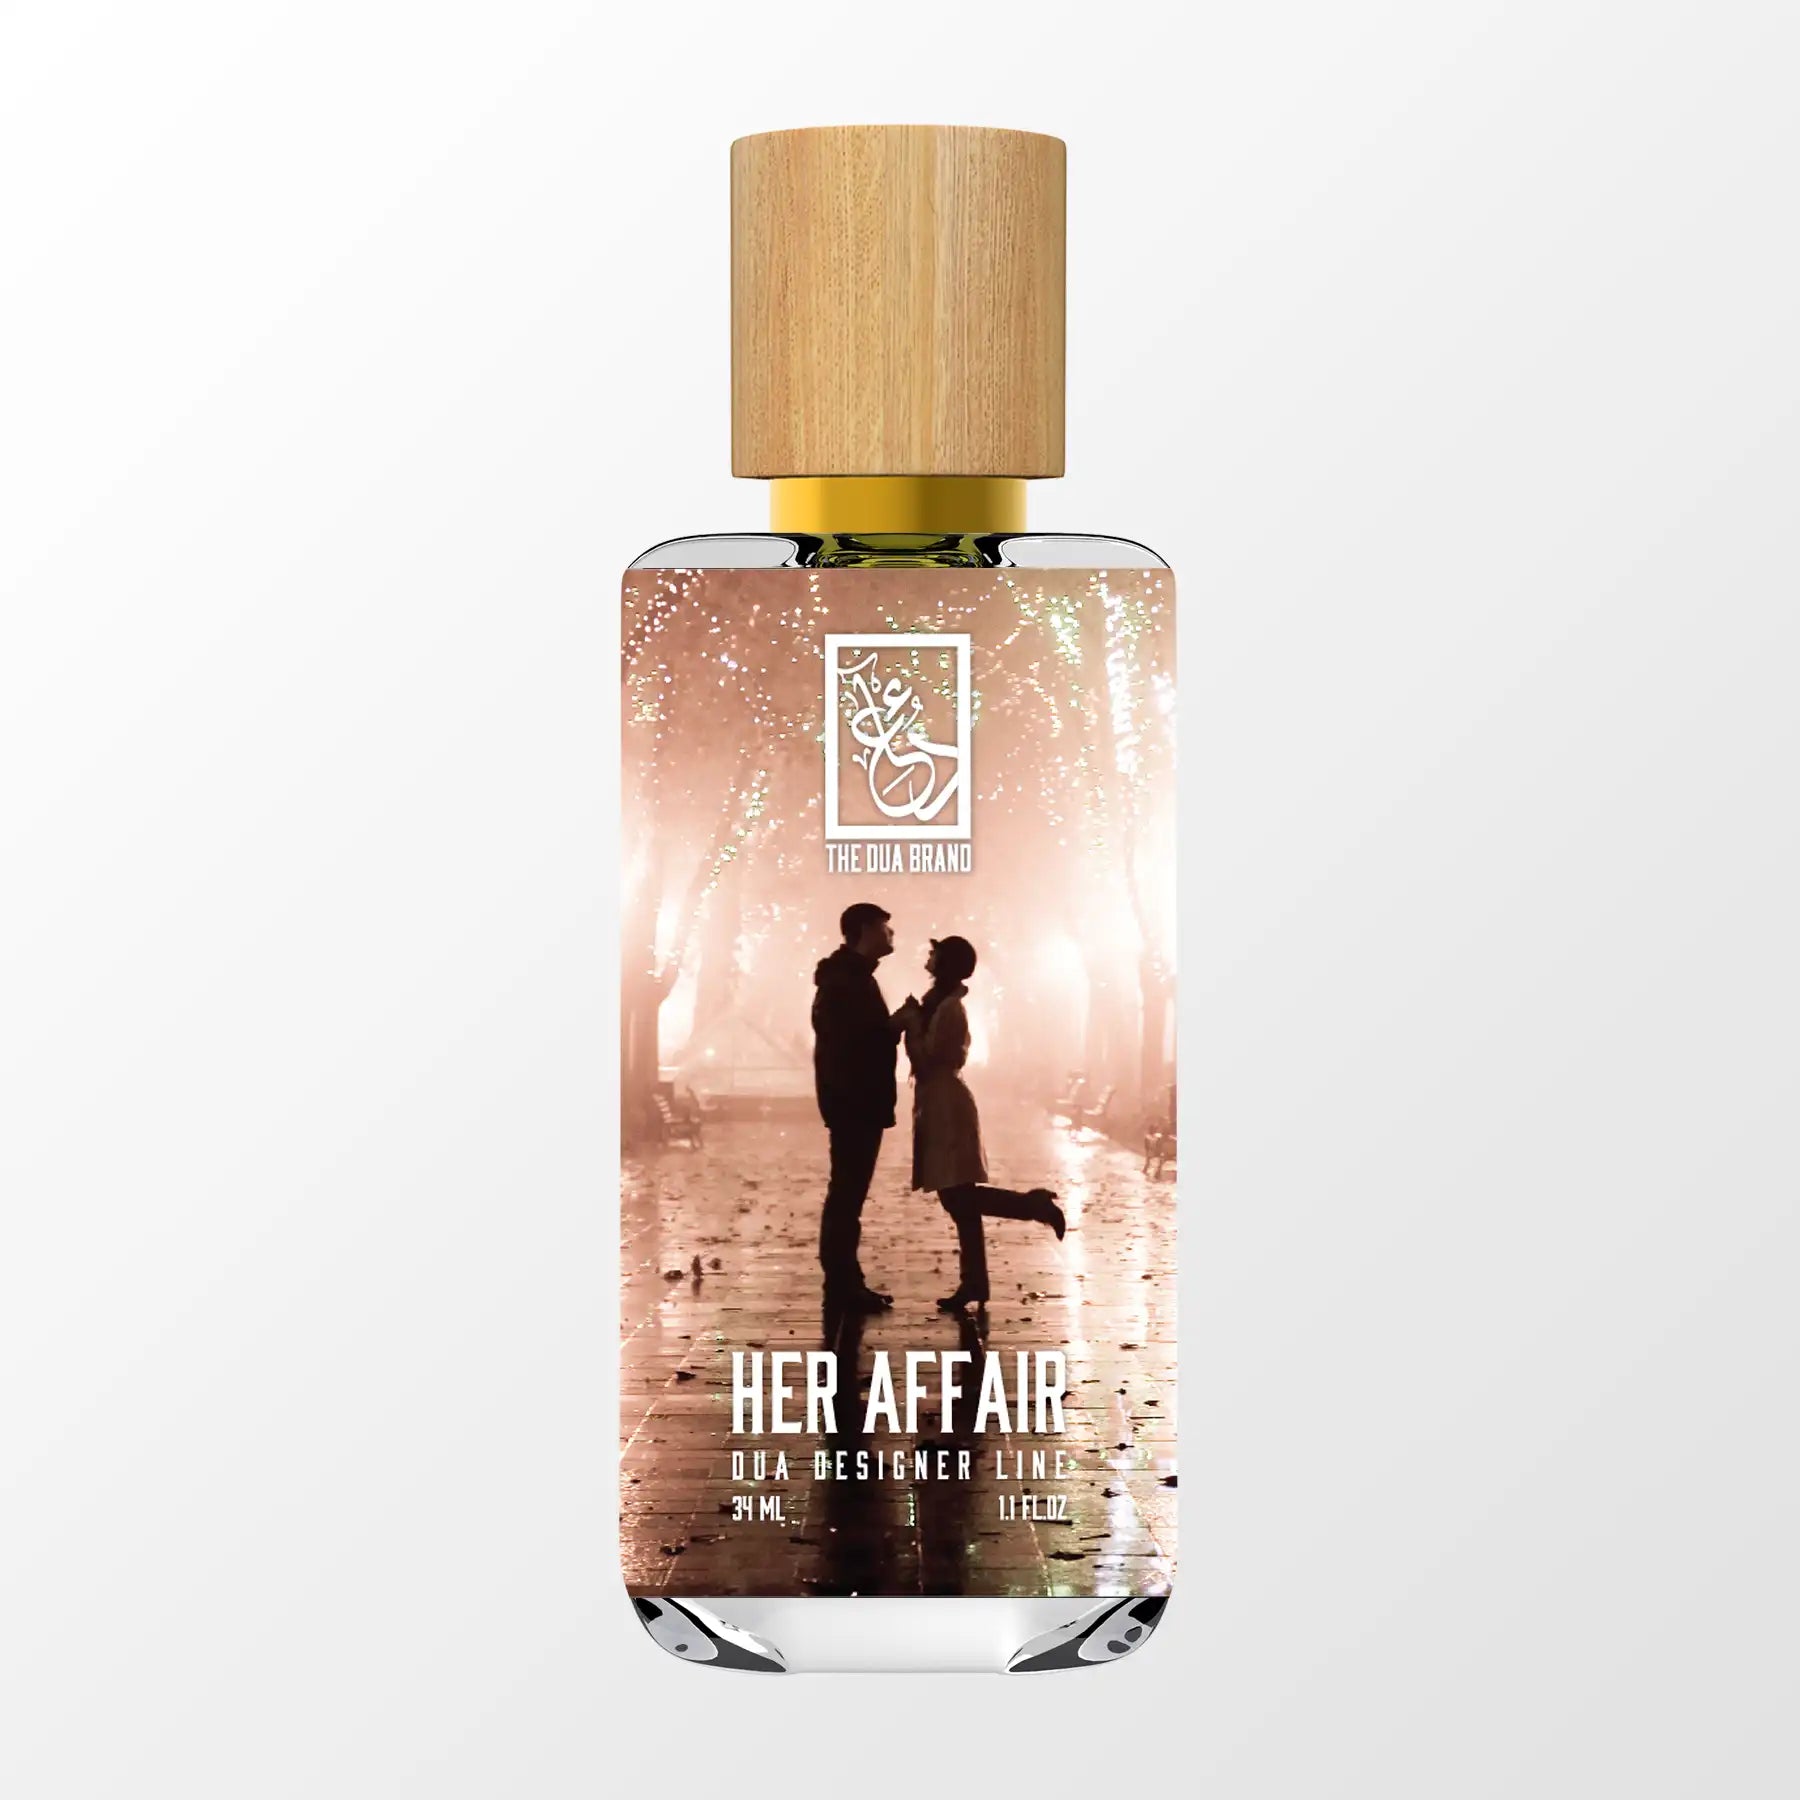 Ralph Lauren - Romance - Oil Perfumery